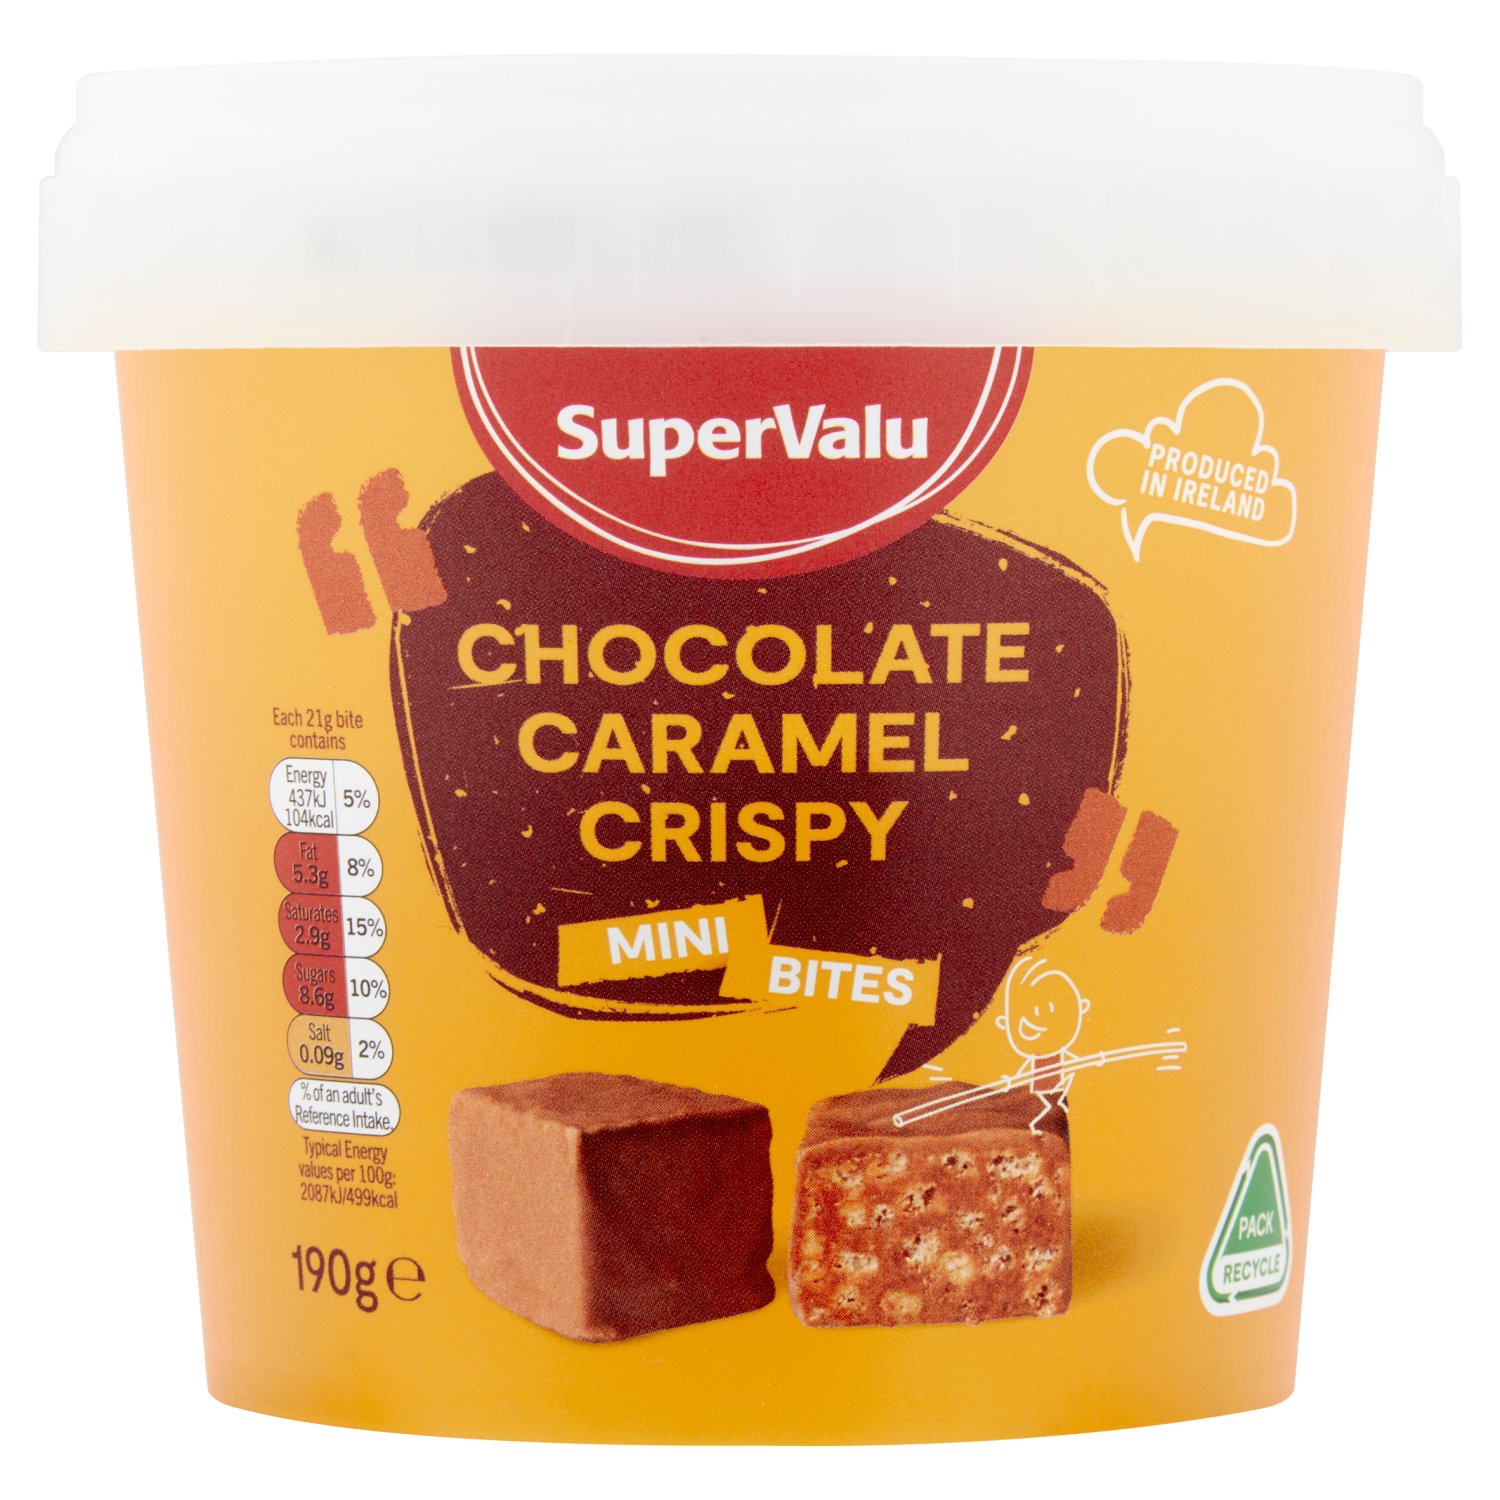 SuperValu Chocolate Caramel Crispy Bites (190 g)